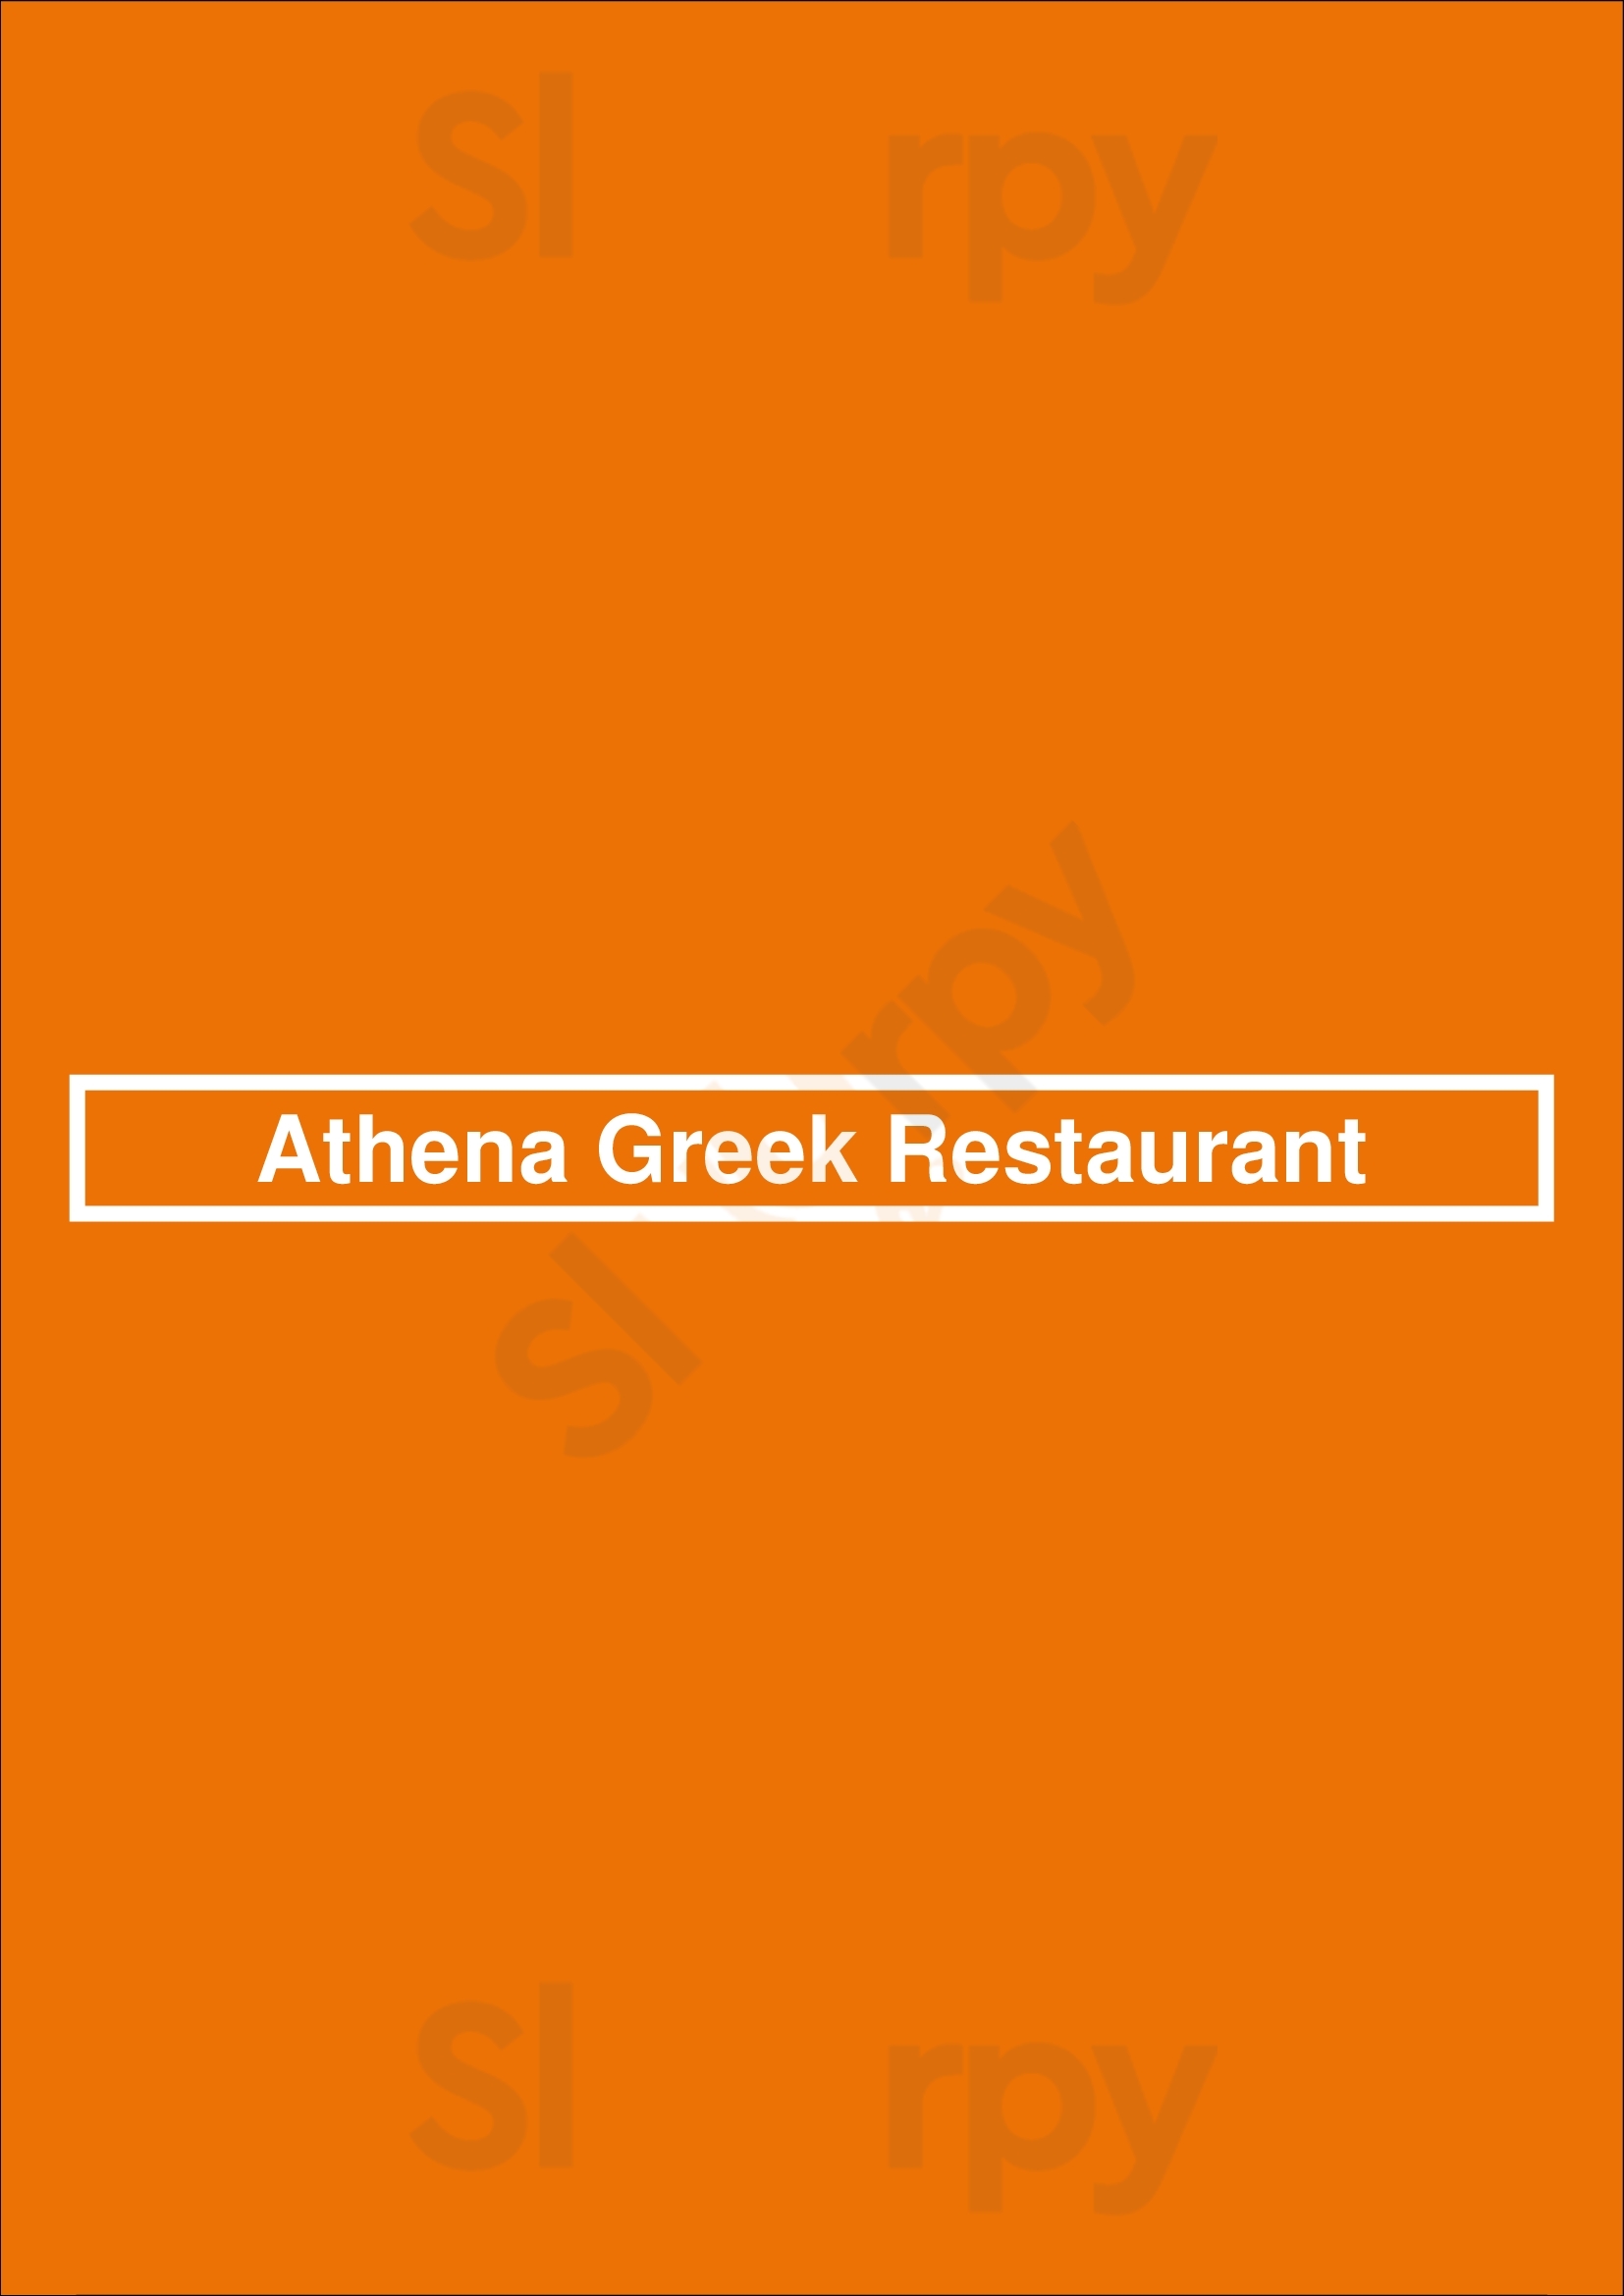 Athena Greek Restaurant Chicago Menu - 1